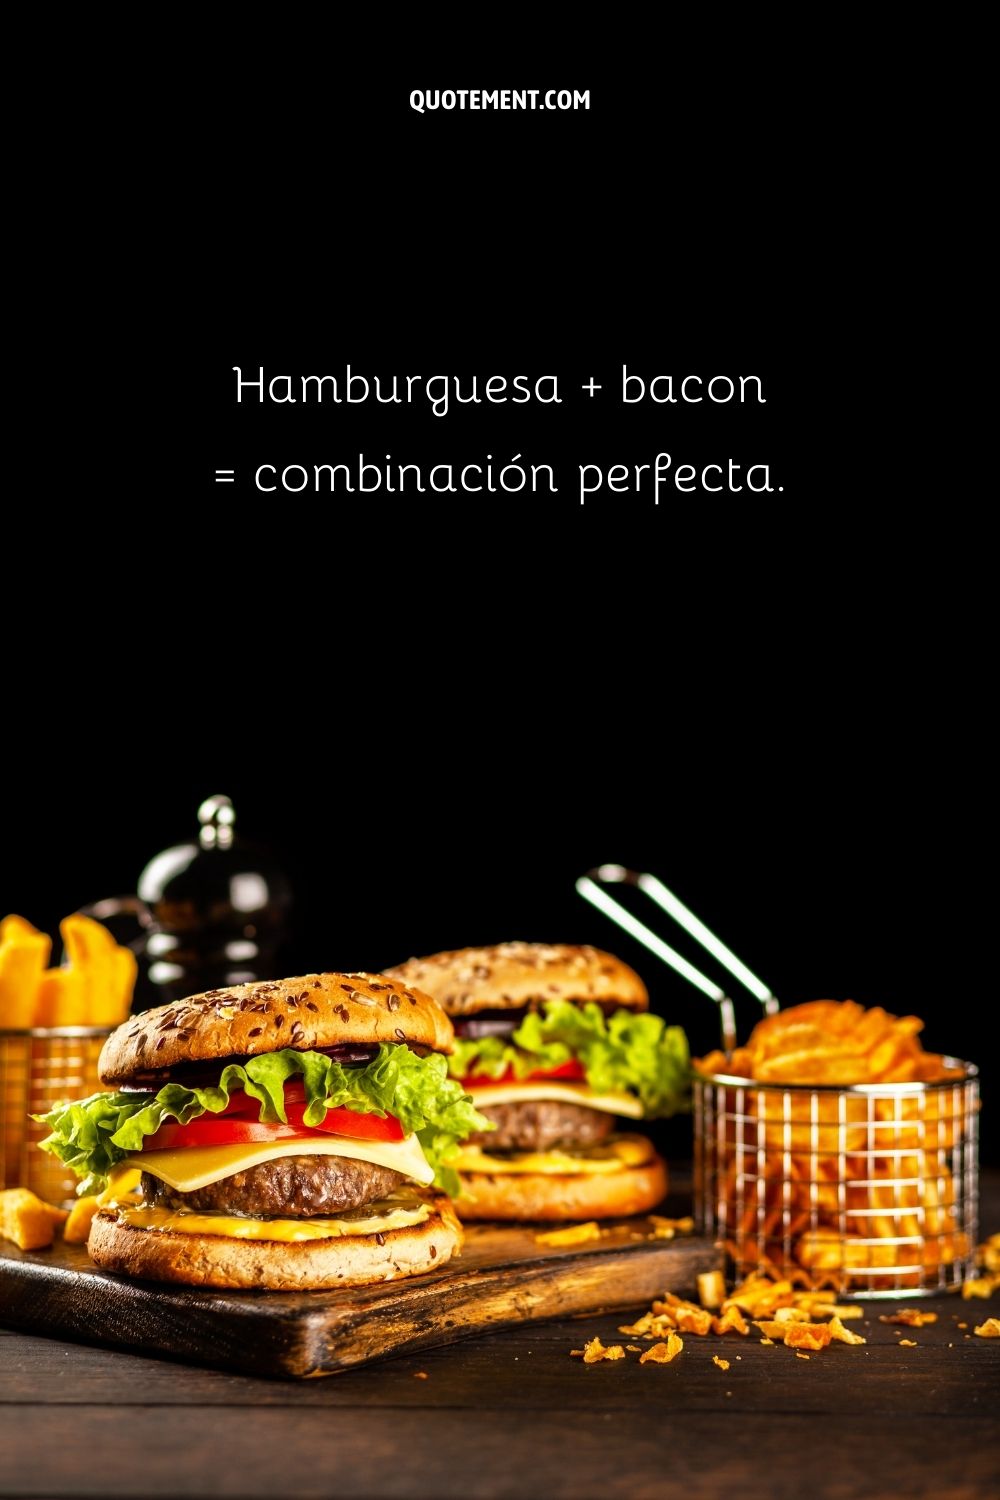 Hamburguesa + bacon = combo perfecto.